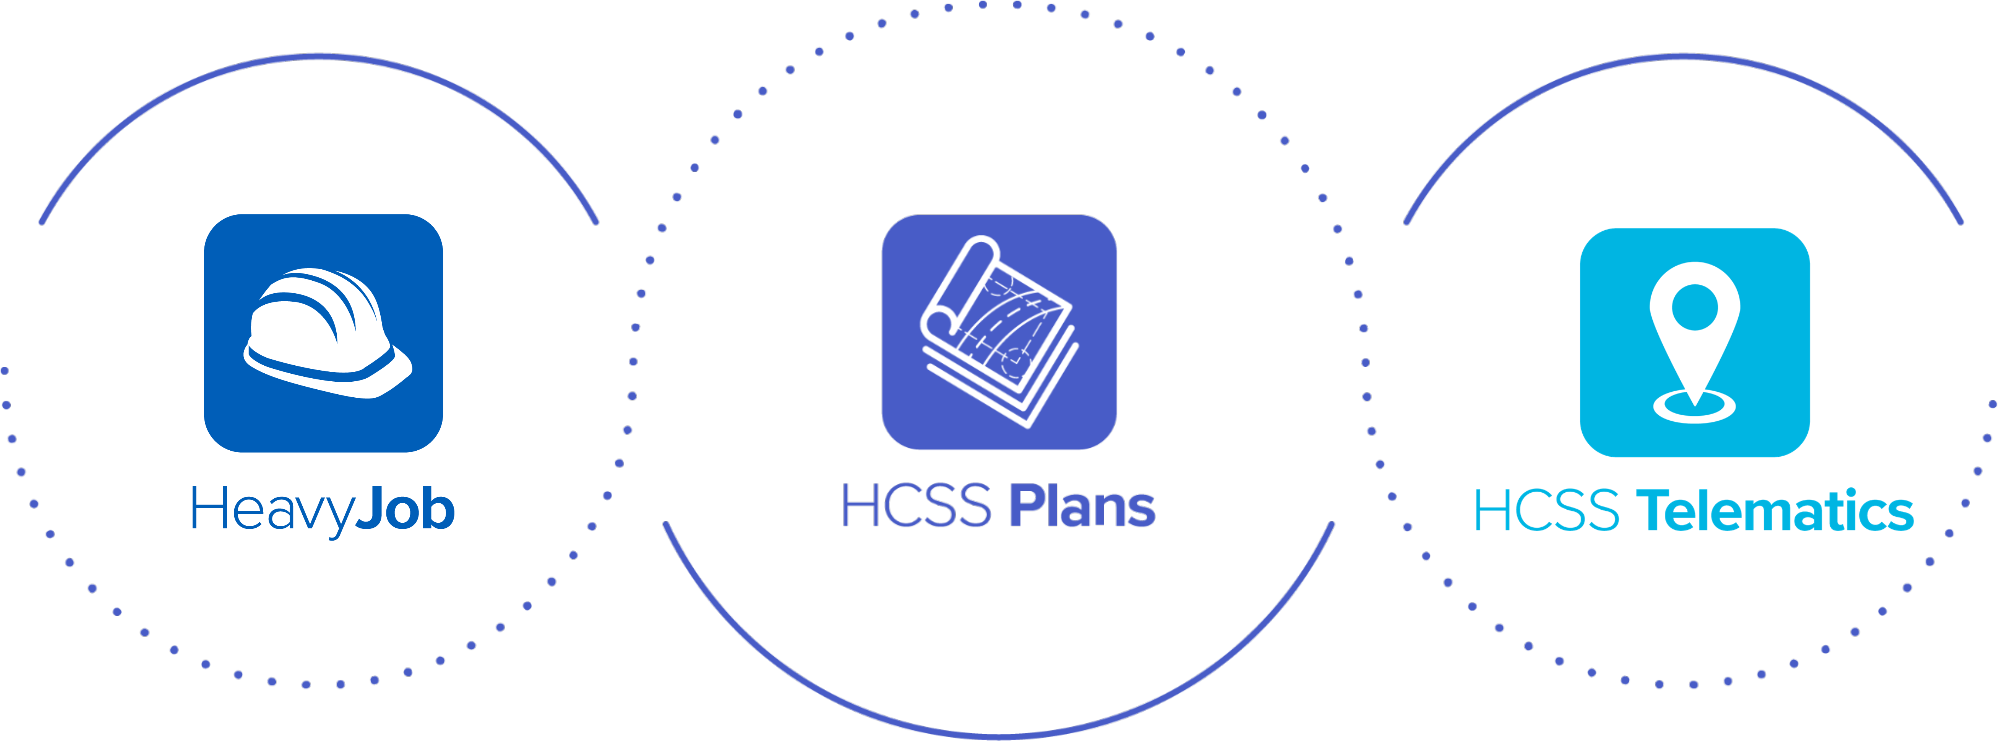 hcss plans, heavyjob and telematics